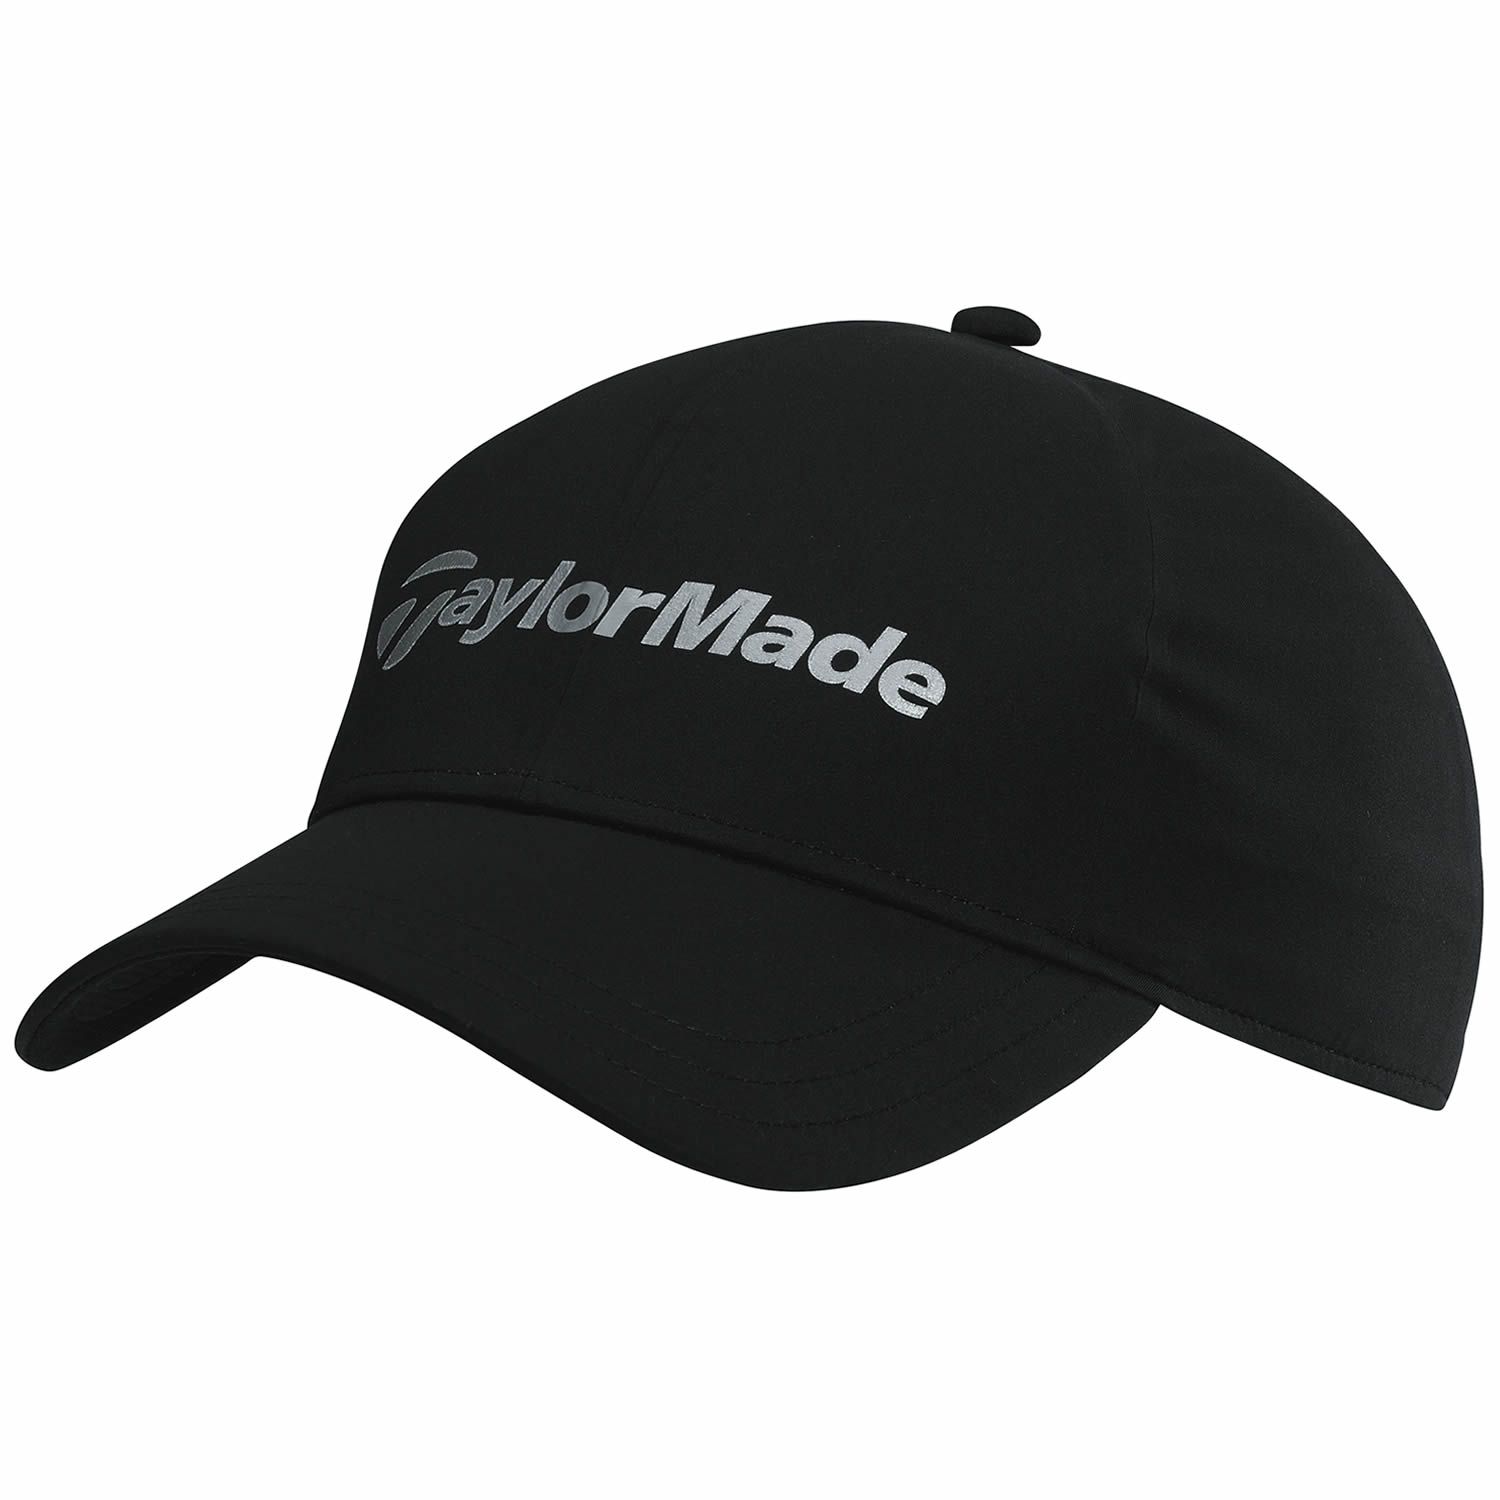 TaylorMade Storm Waterproof Golf Baseball Hat